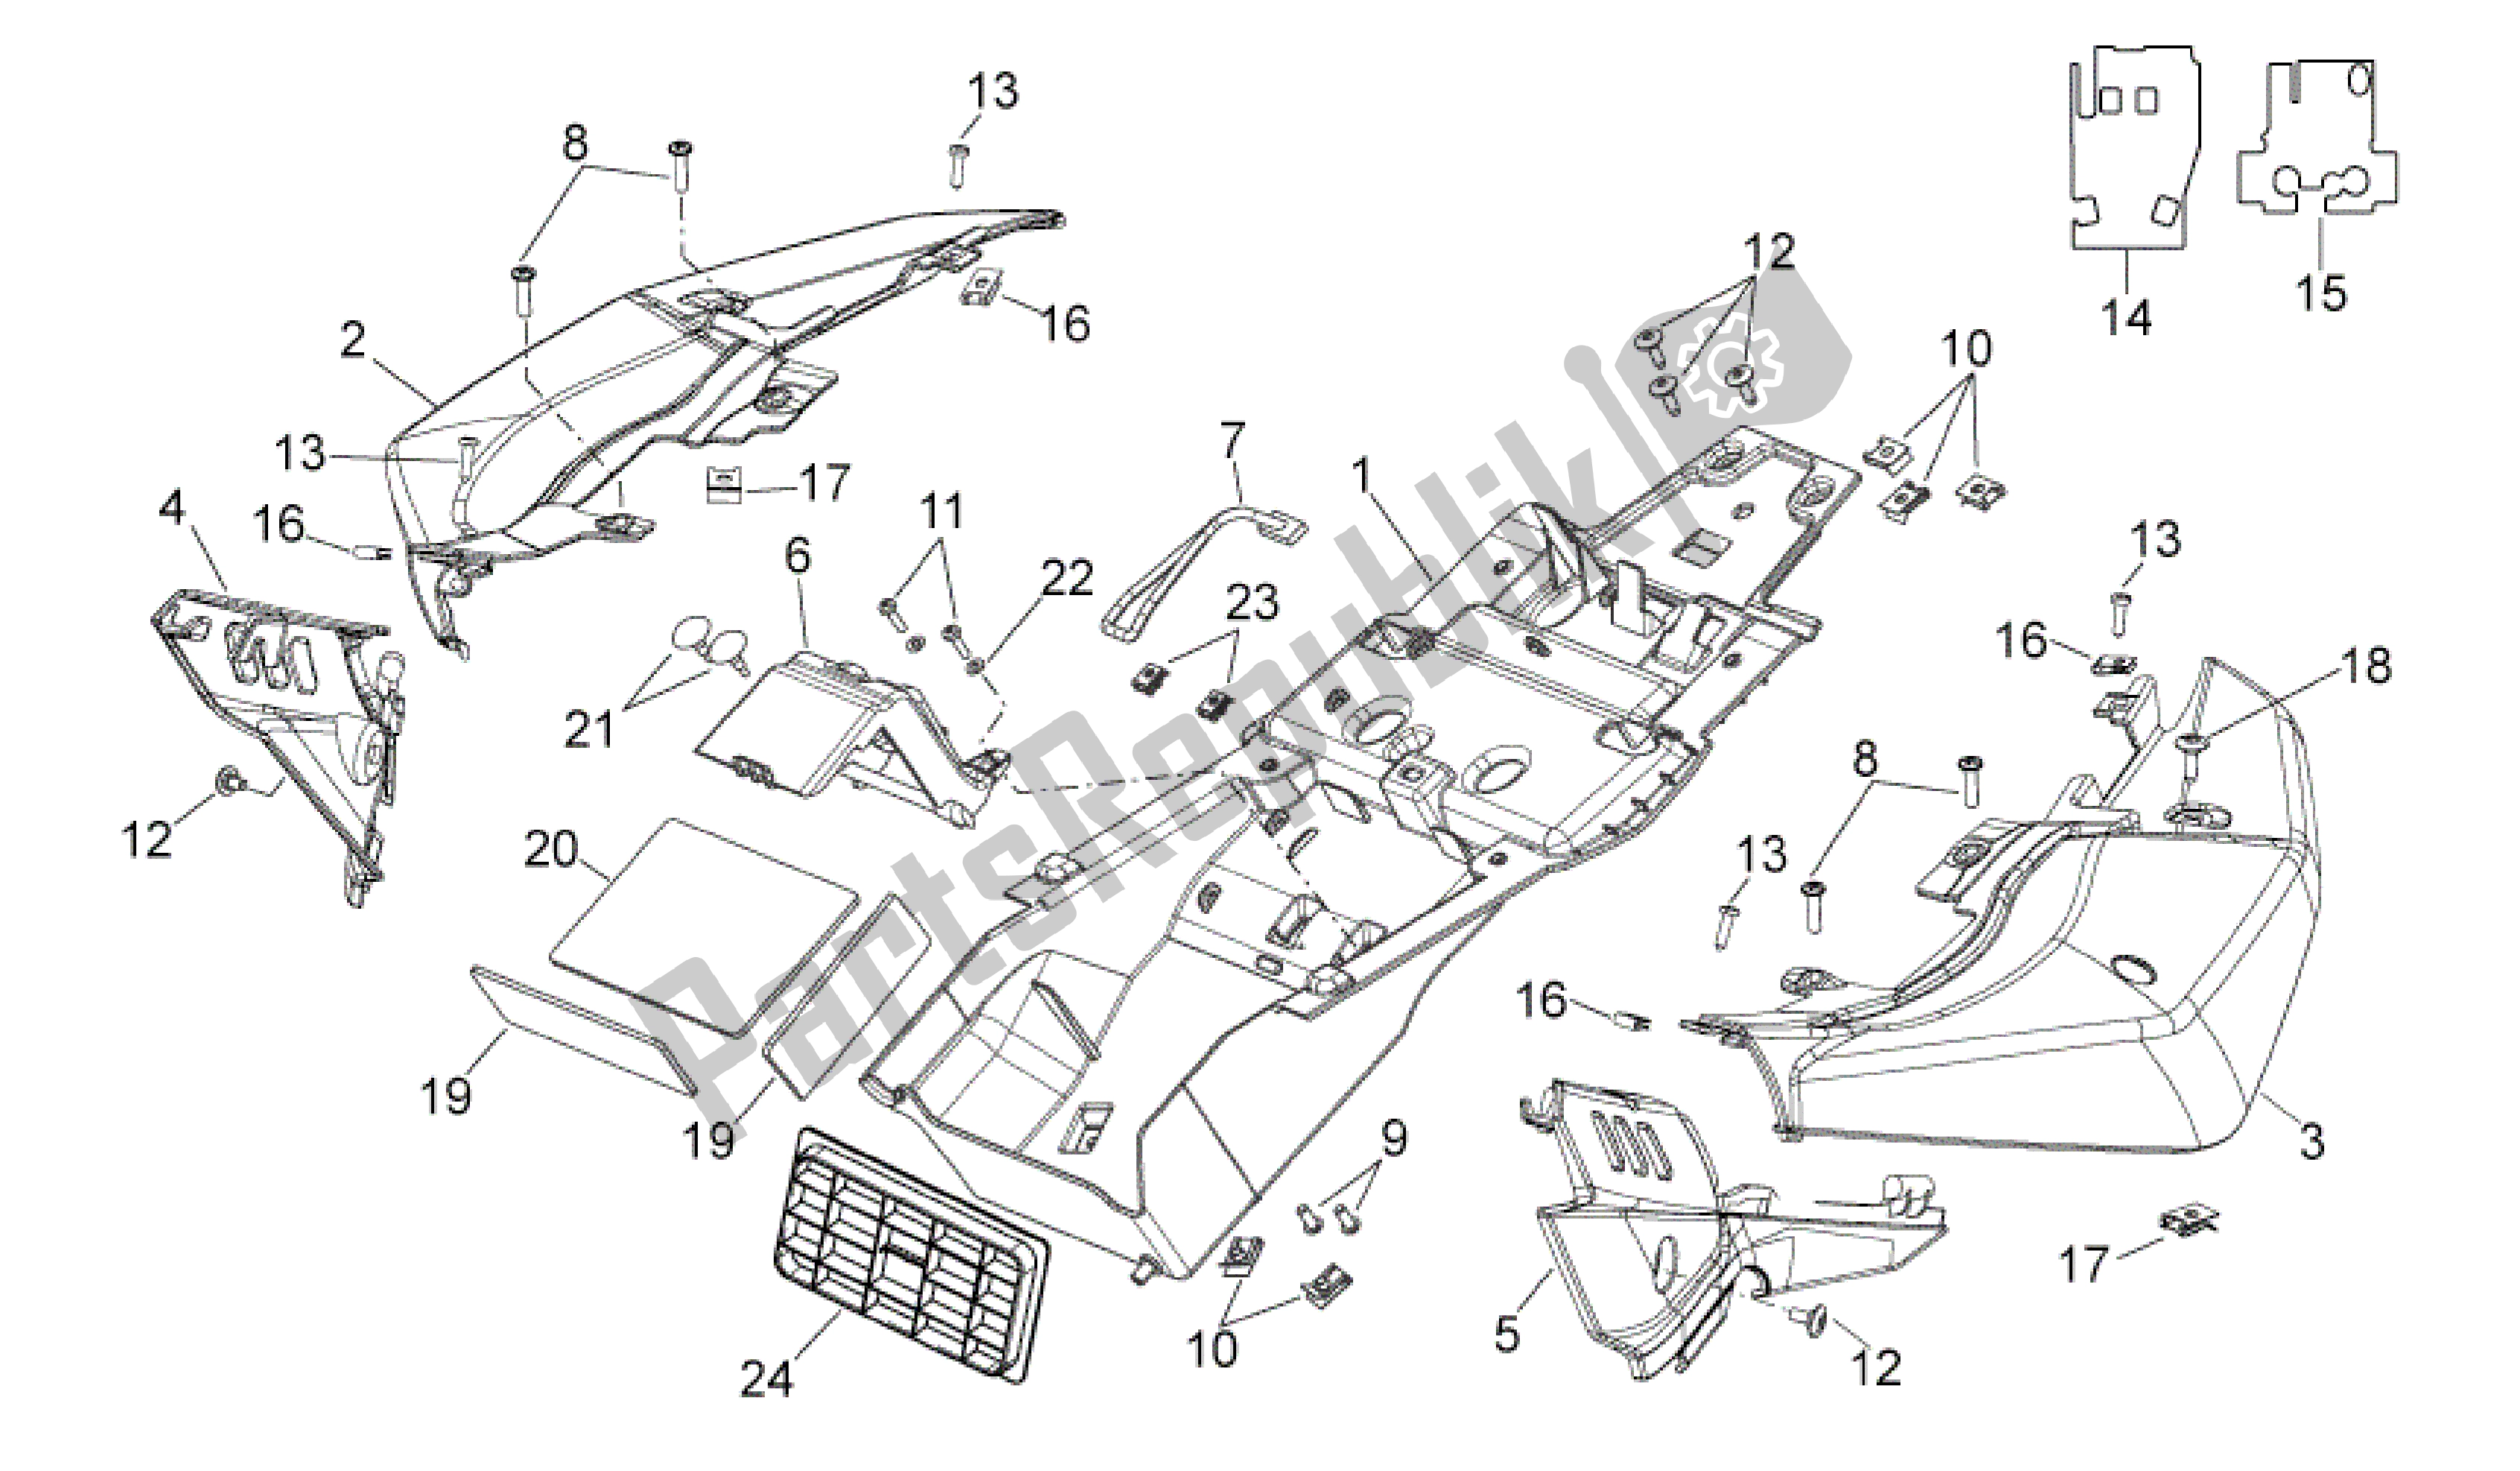 All parts for the Rear Body I of the Aprilia Shiver 750 2011 - 2013